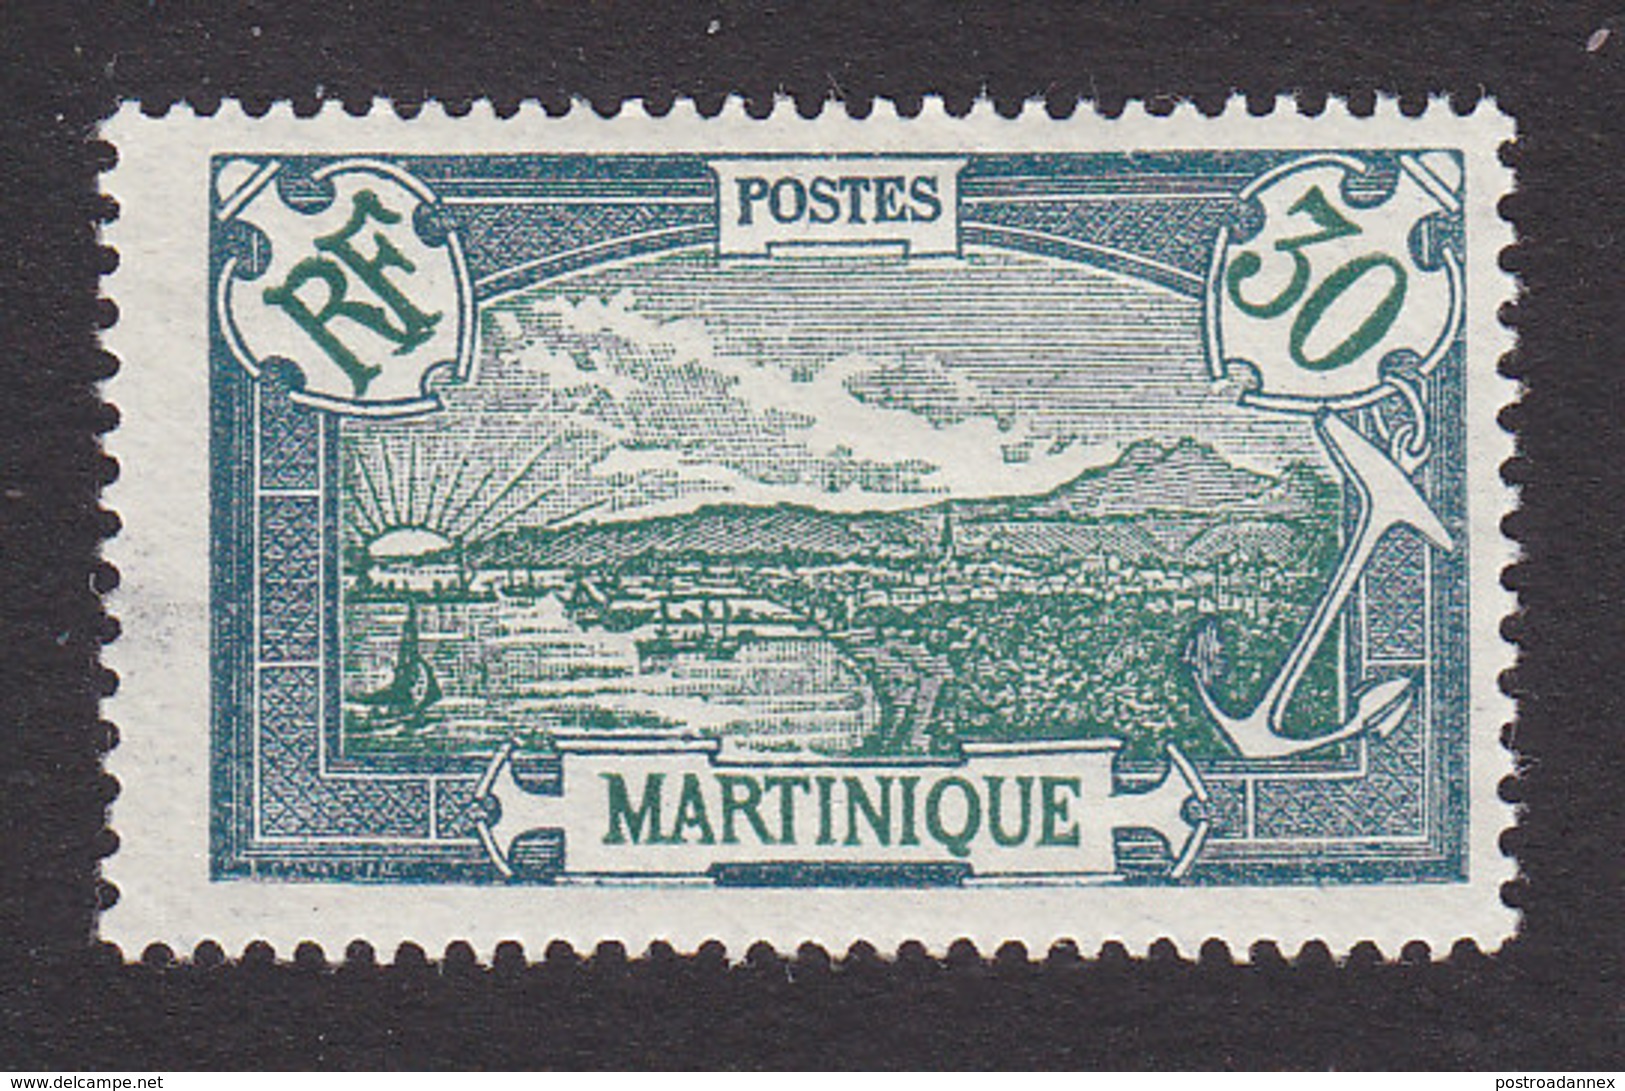 Martinique, Scott #80, Mint Hinged, Scenes Of Martinique, Issued 1908 - Unused Stamps